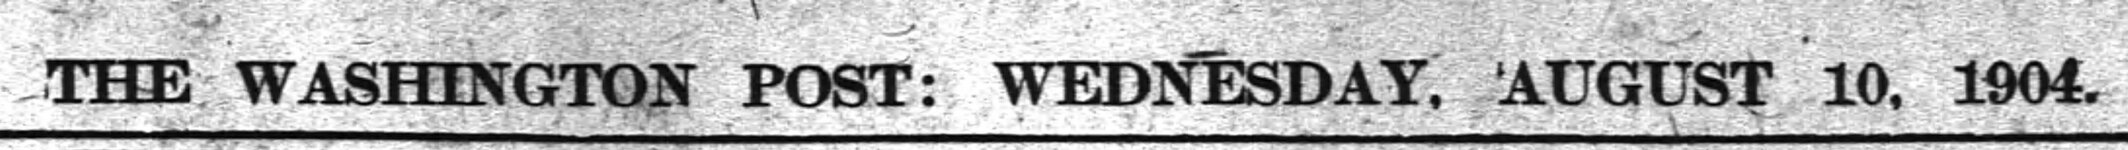 Herndon Baseball Article Wash Post D.C. August 10, 1904 Headline Date.jpg